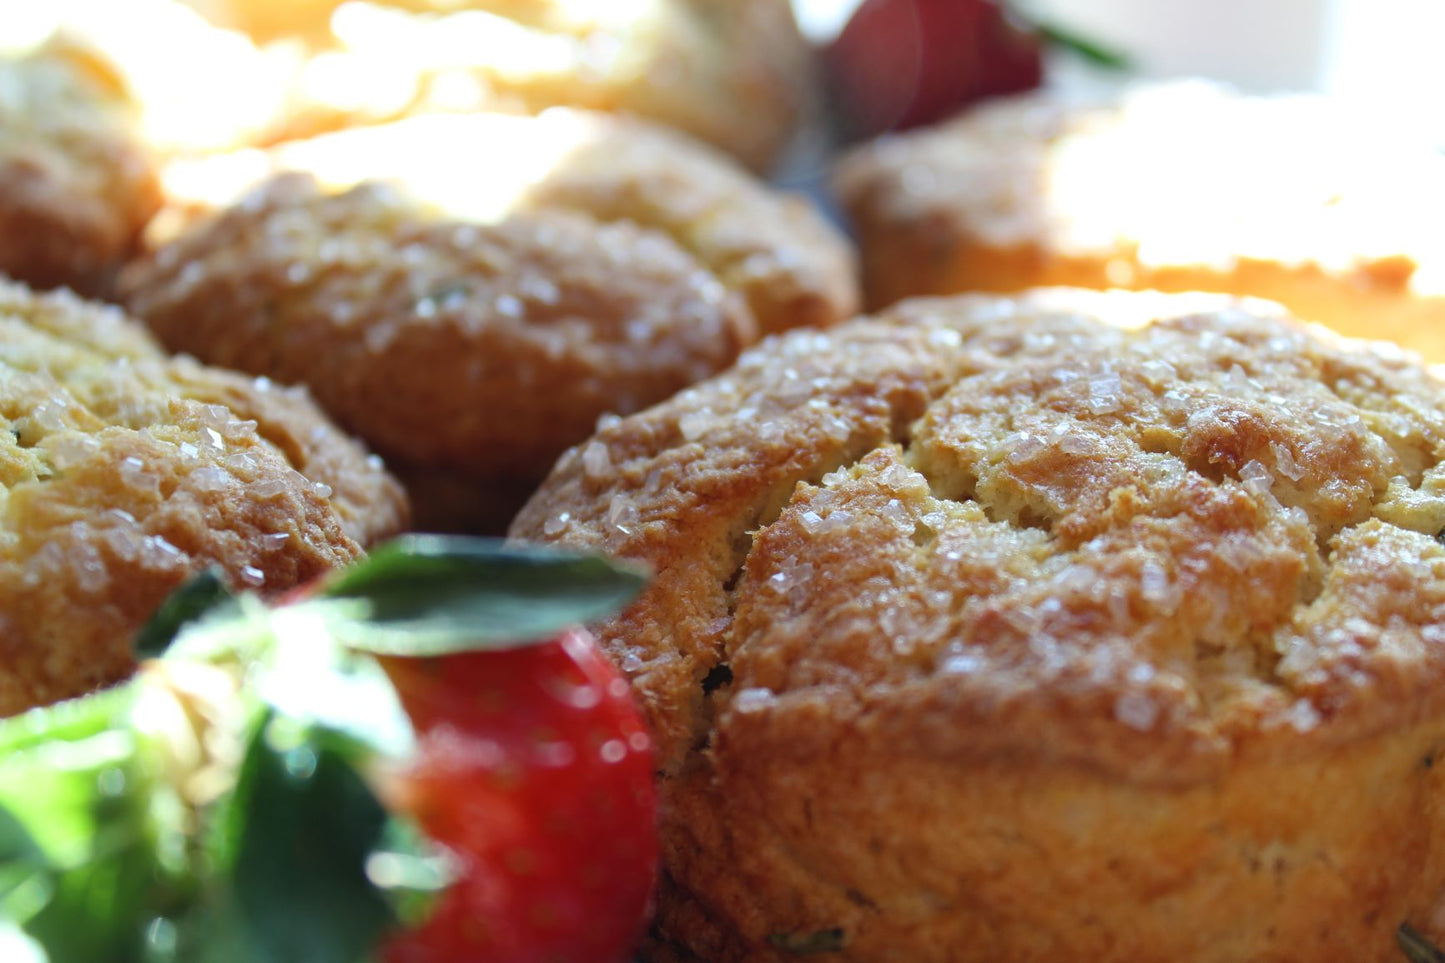 Sun, Feb 25: Crumpets, Scones & English Muffins